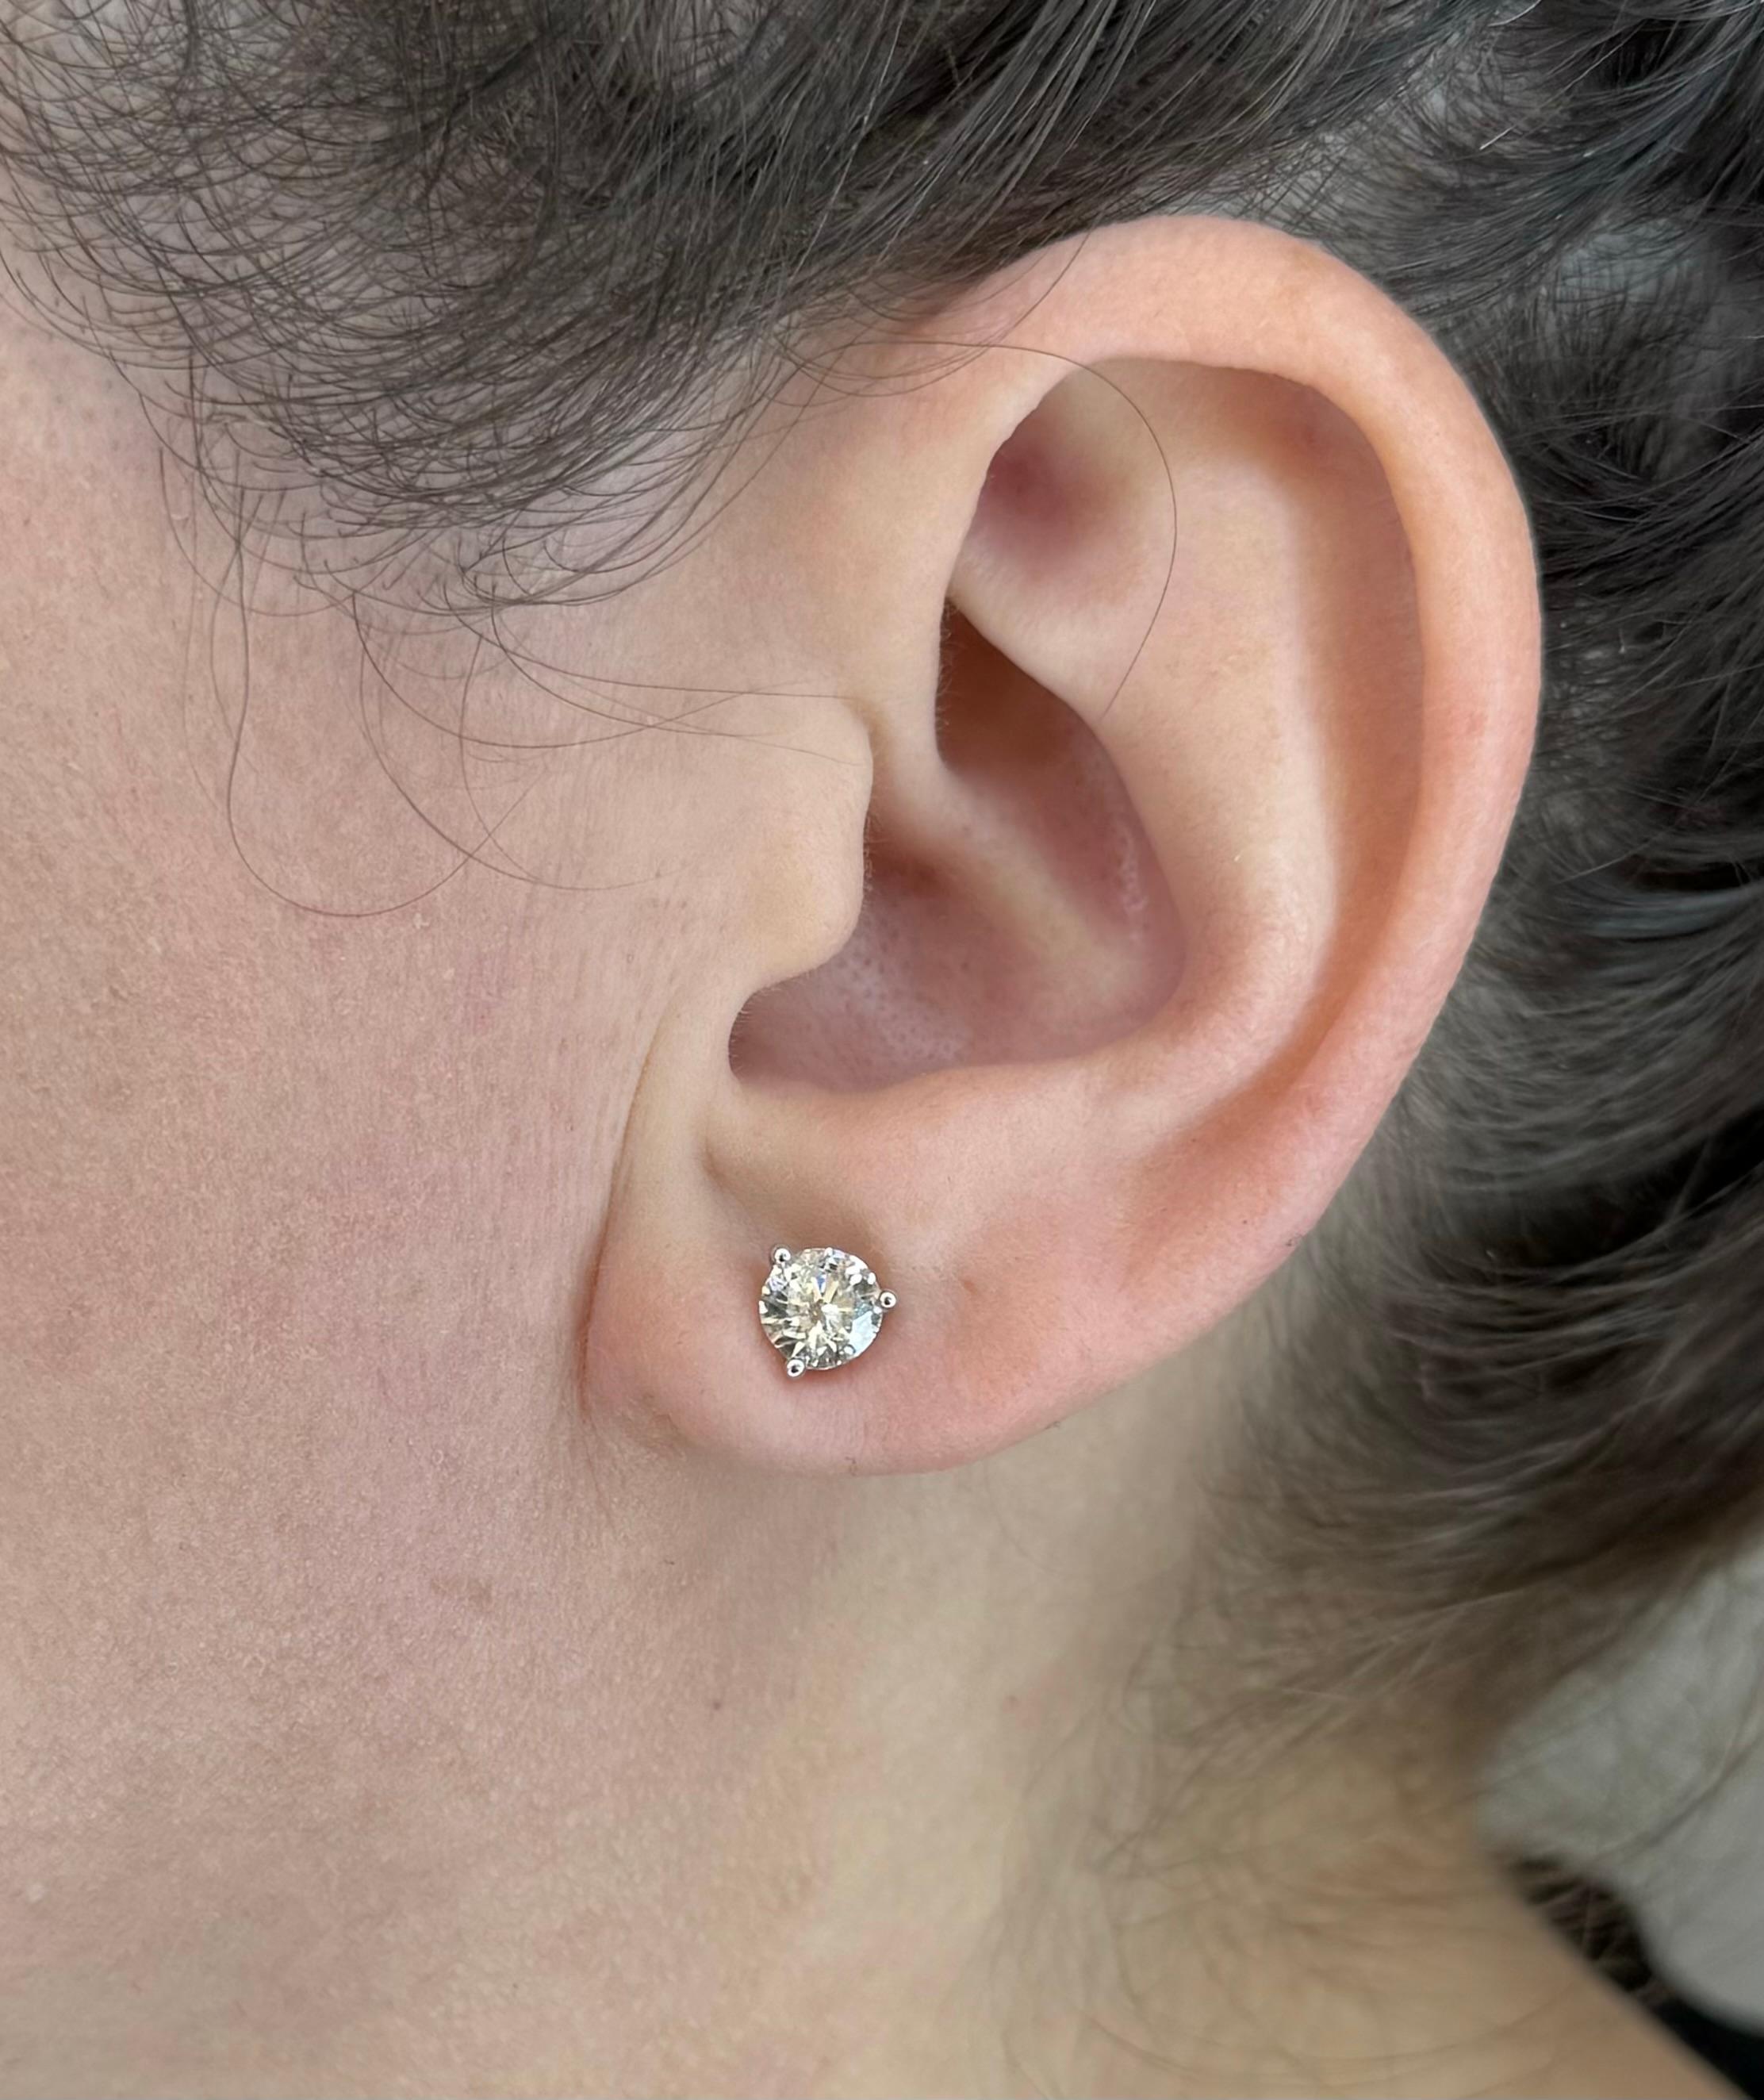 Brand New 1.55cttw Natural Diamond Stud Earrings in 14k White Gold For Sale 1